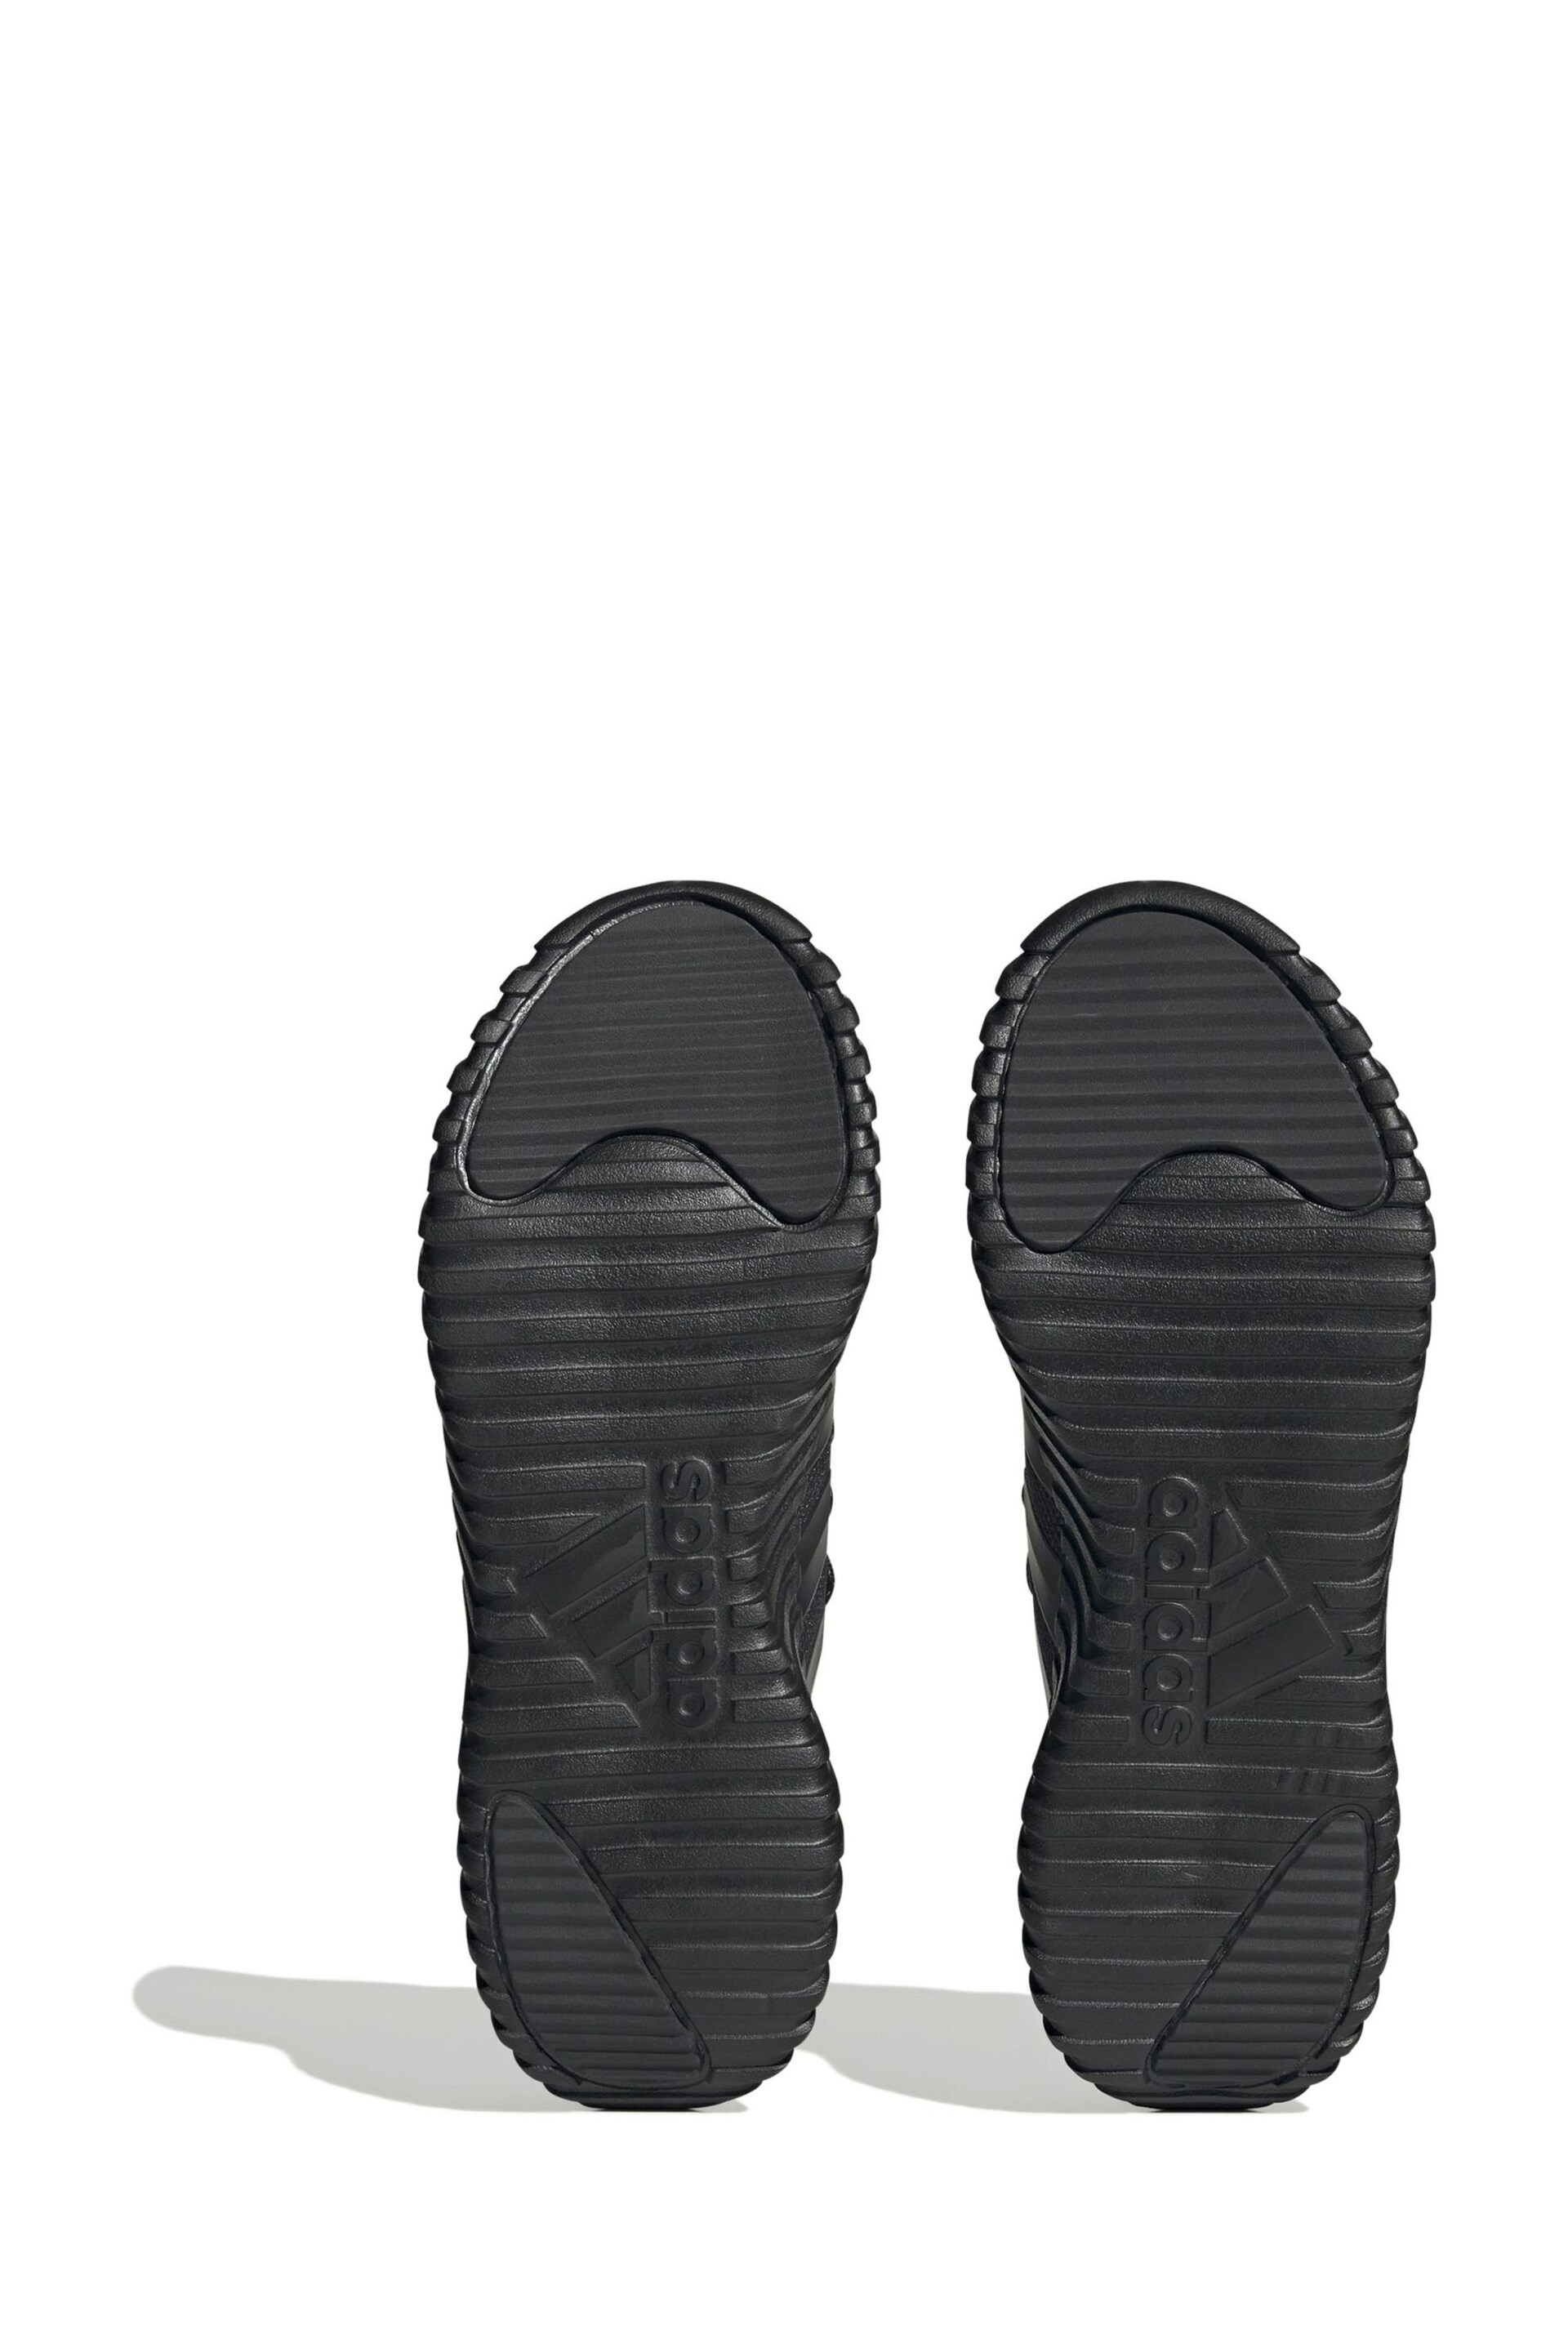 adidas dark Black Sportswear Kantana Trainers - Image 7 of 9